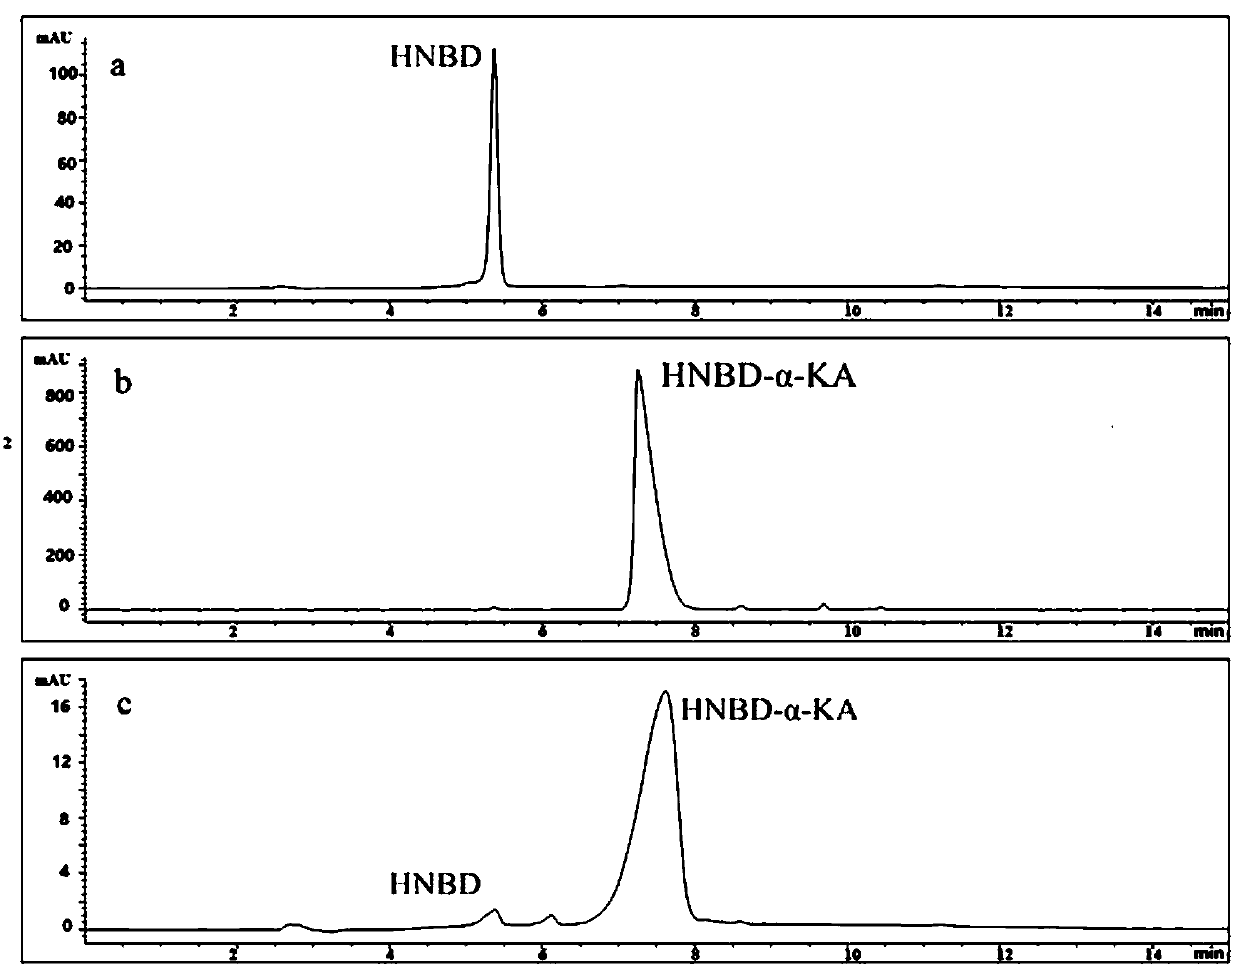 Preparation method of fluorescent/ultraviolet molecular probe for alpha-ketoglutarate and its application in biological samples